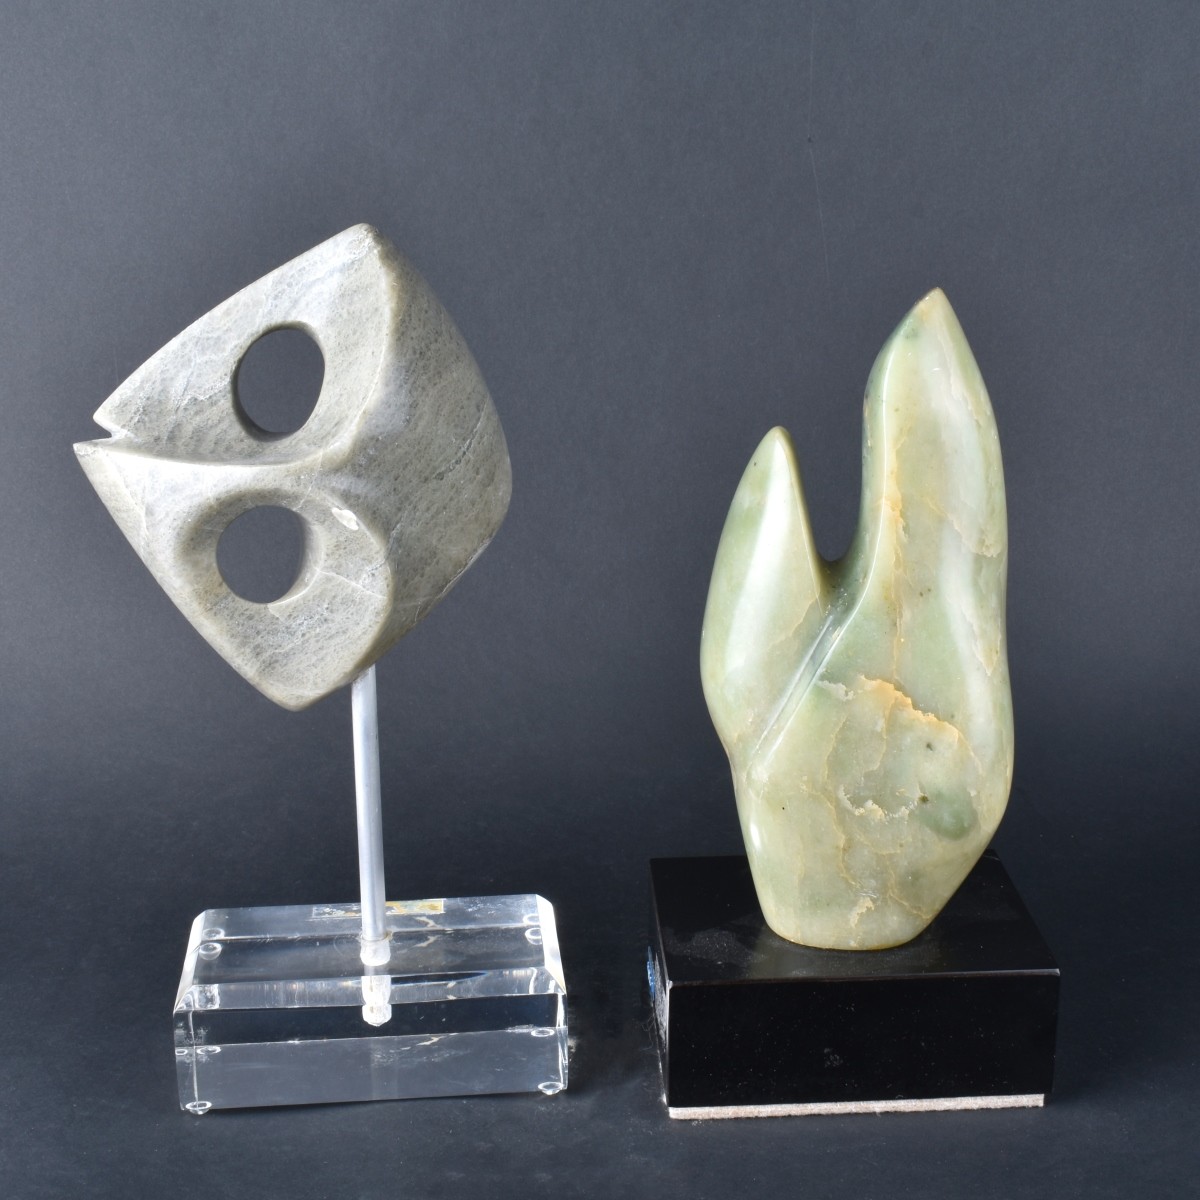 2 Stone Sculptures